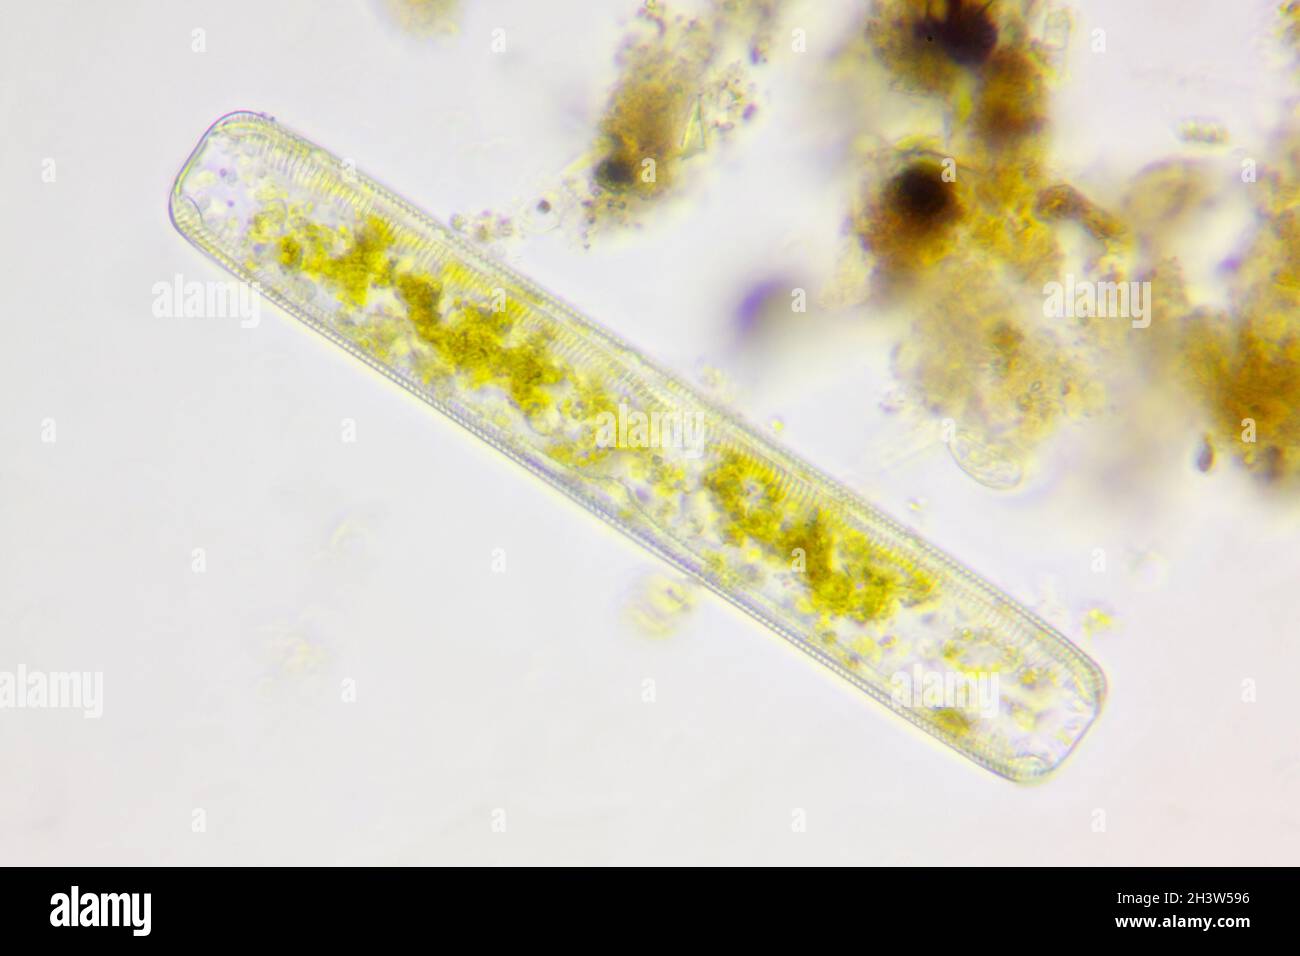 Microscopic view of a diatom (Navicula). Brightfield illumination. Stock Photo